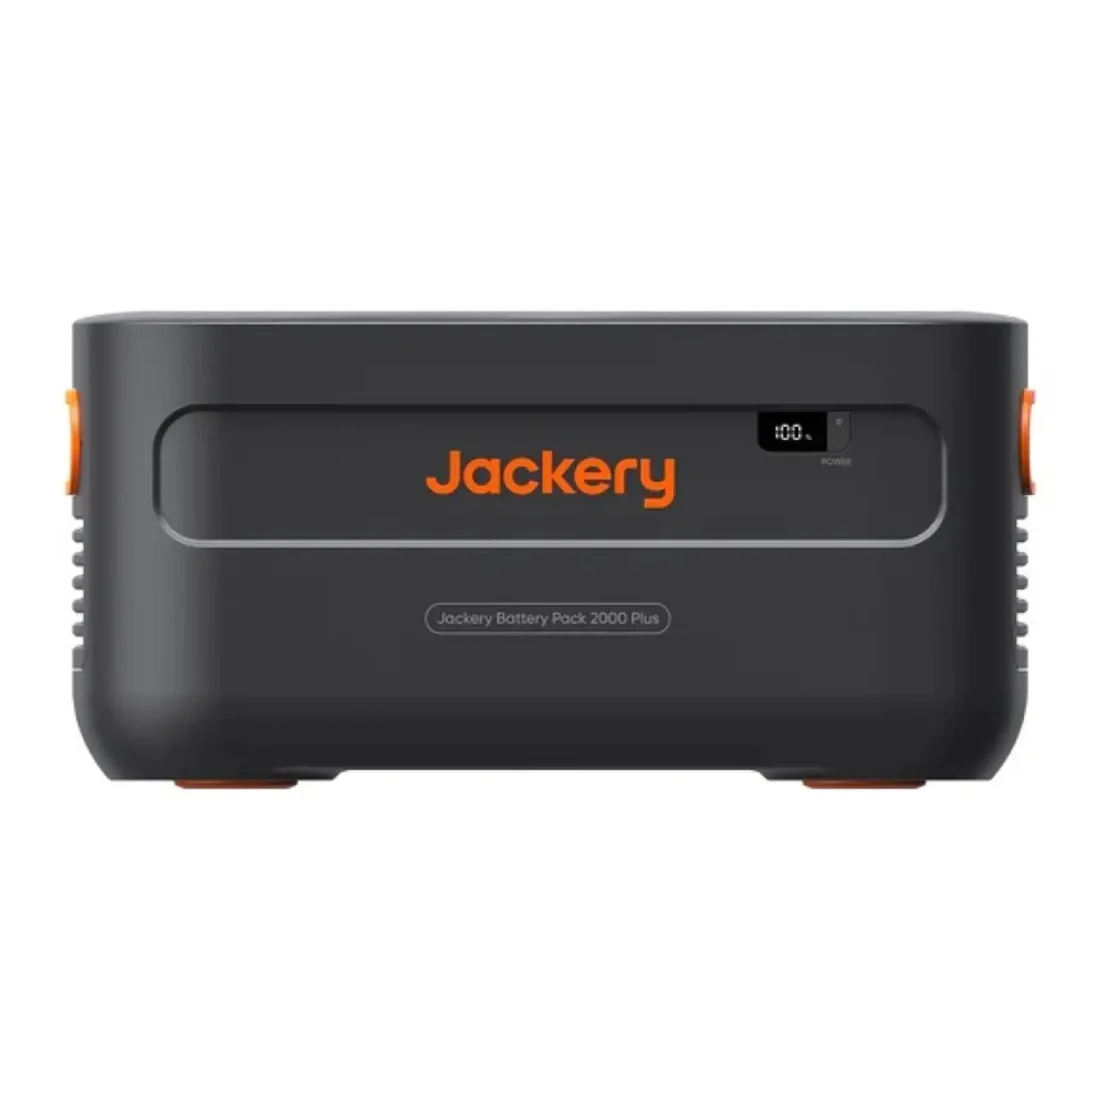 Jackery Explorer 2000 Plus + Jackery Battery Pack 2000 Plus + SolarSaga 200W